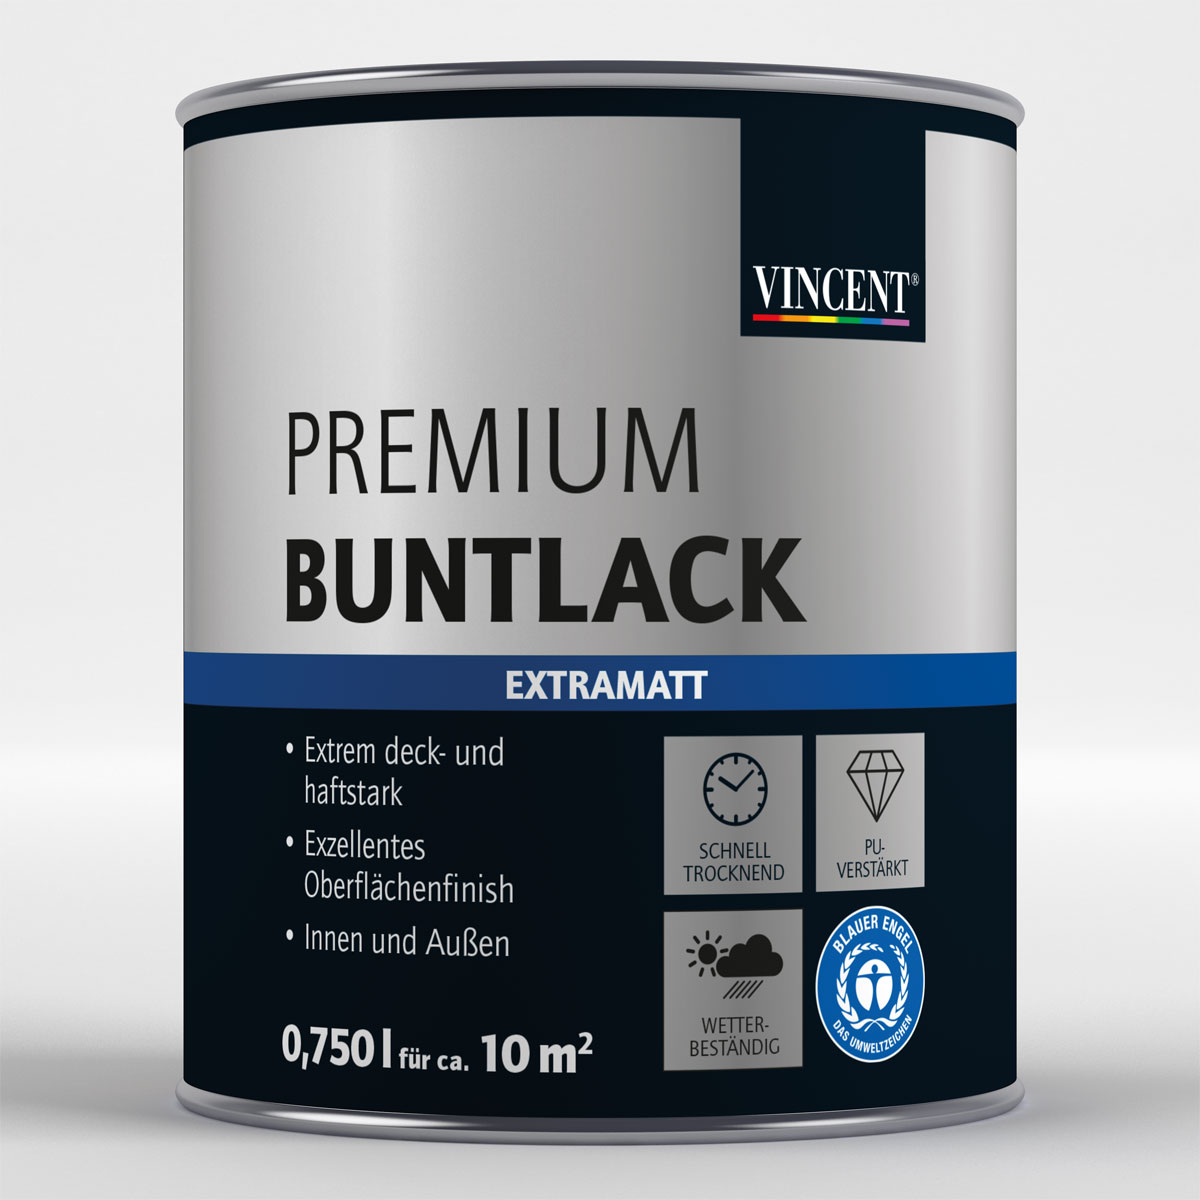 Premium Buntlack „grau metallic“ extramatt, 750 ml